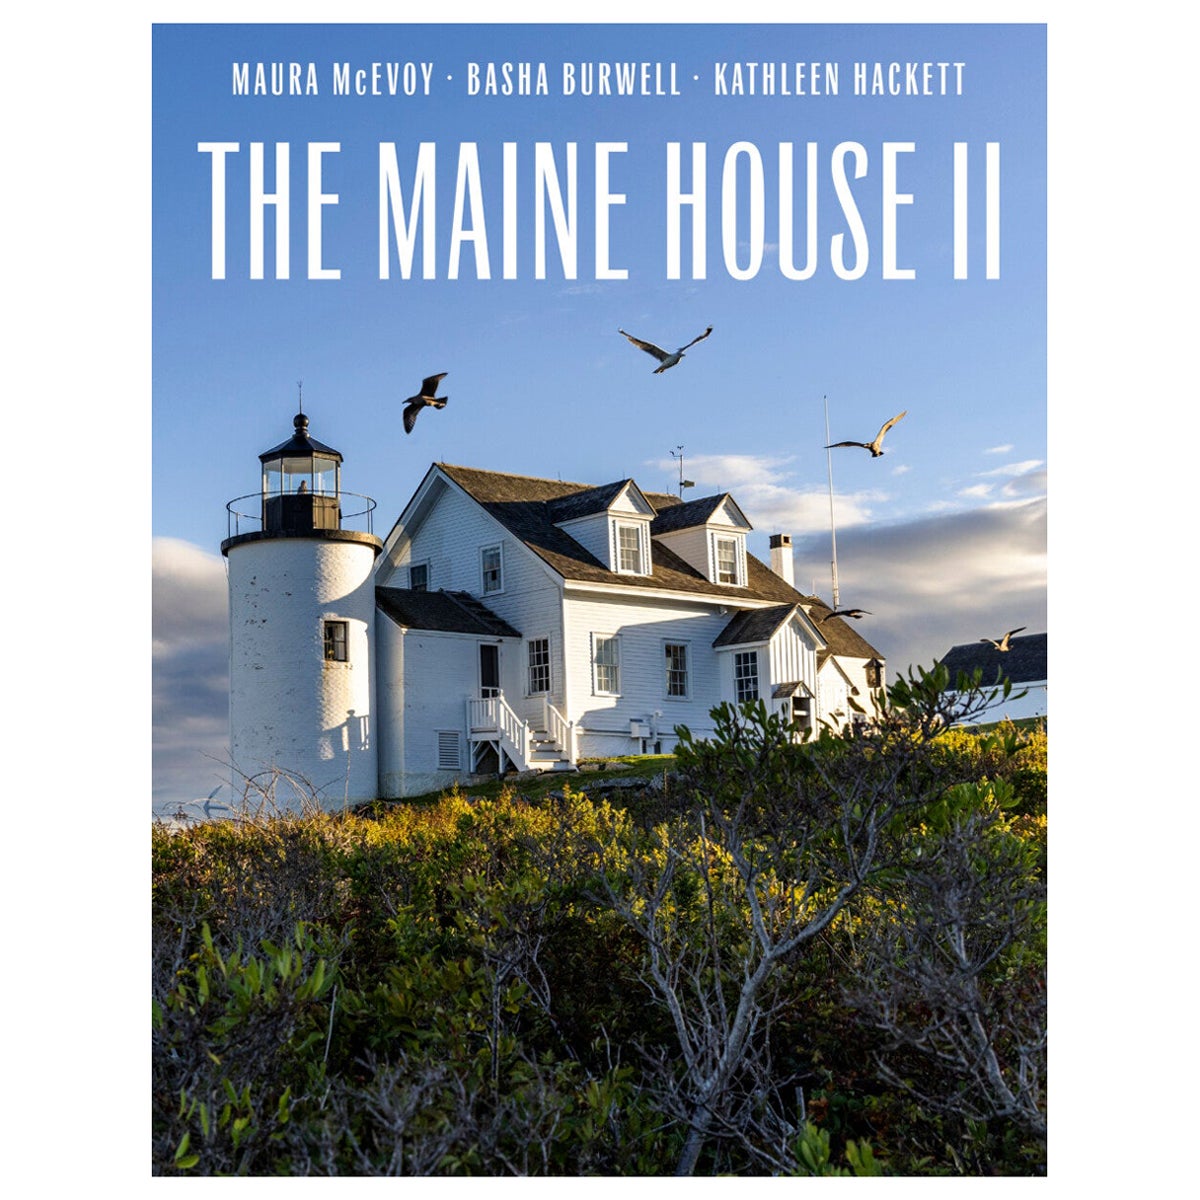 The Maine House II Book by Maura McEvoy, Basha Burwell, and Kathleen Hackett For Sale